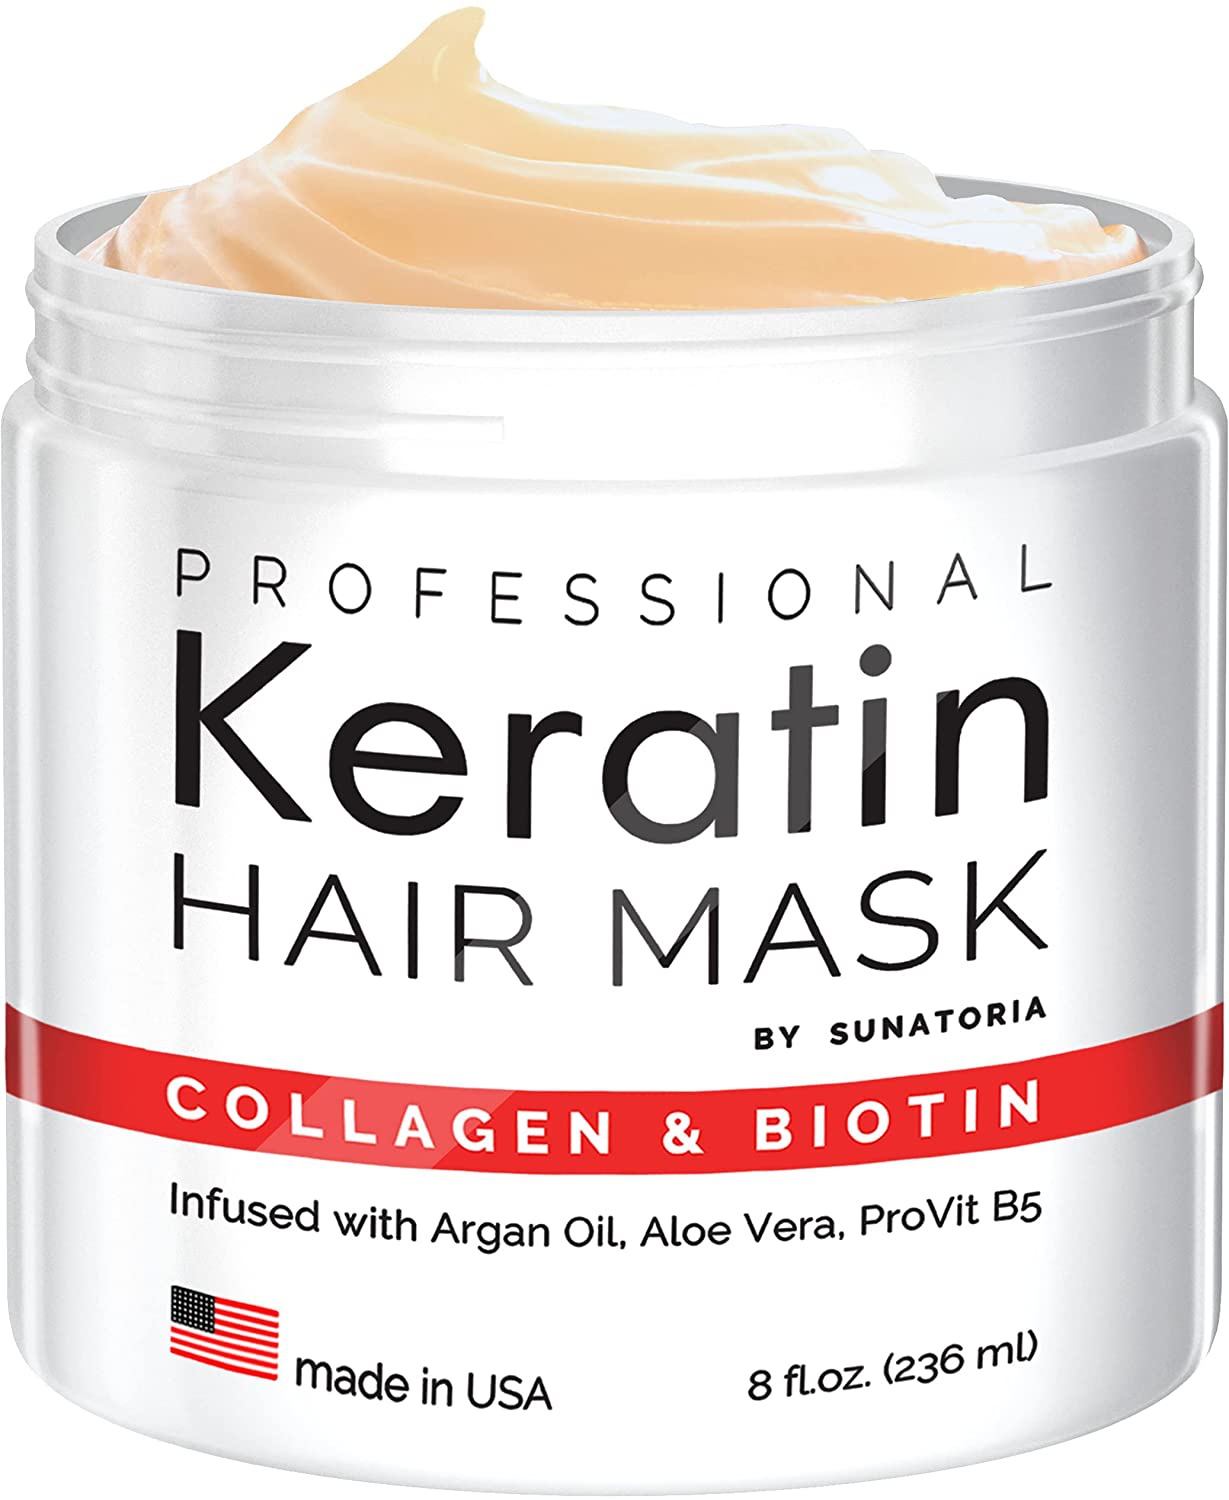 Sunatoria Professional Keratin Hair Mask: Collagen & Biotin